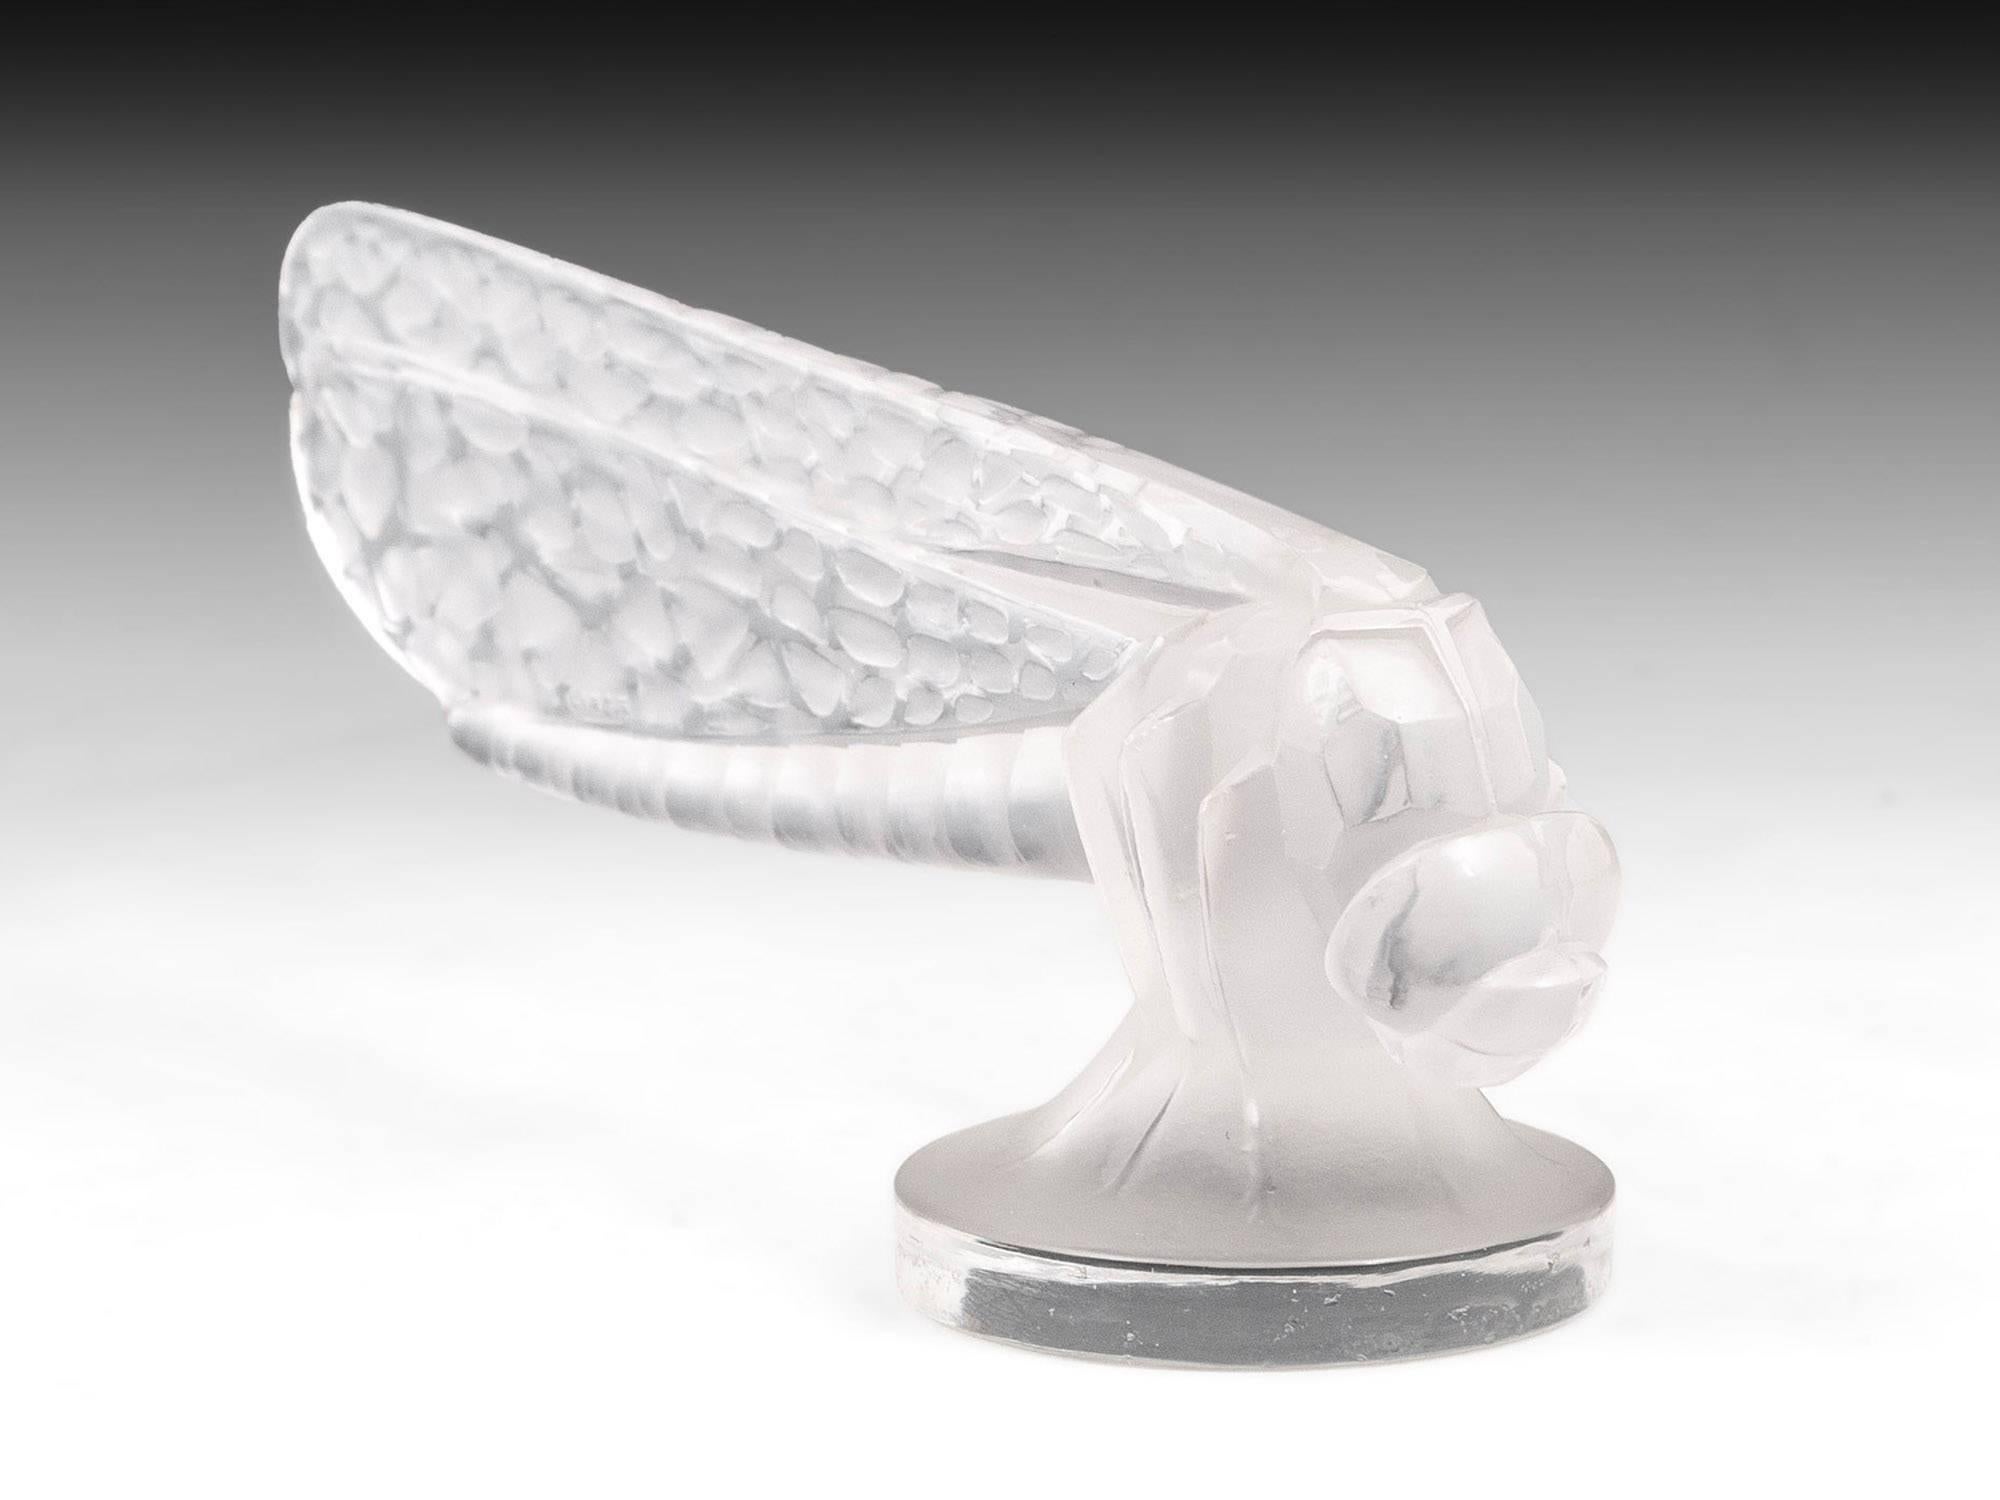 20th Century Rene Lalique Petite Libellule Small Dragonfly Car Mascot